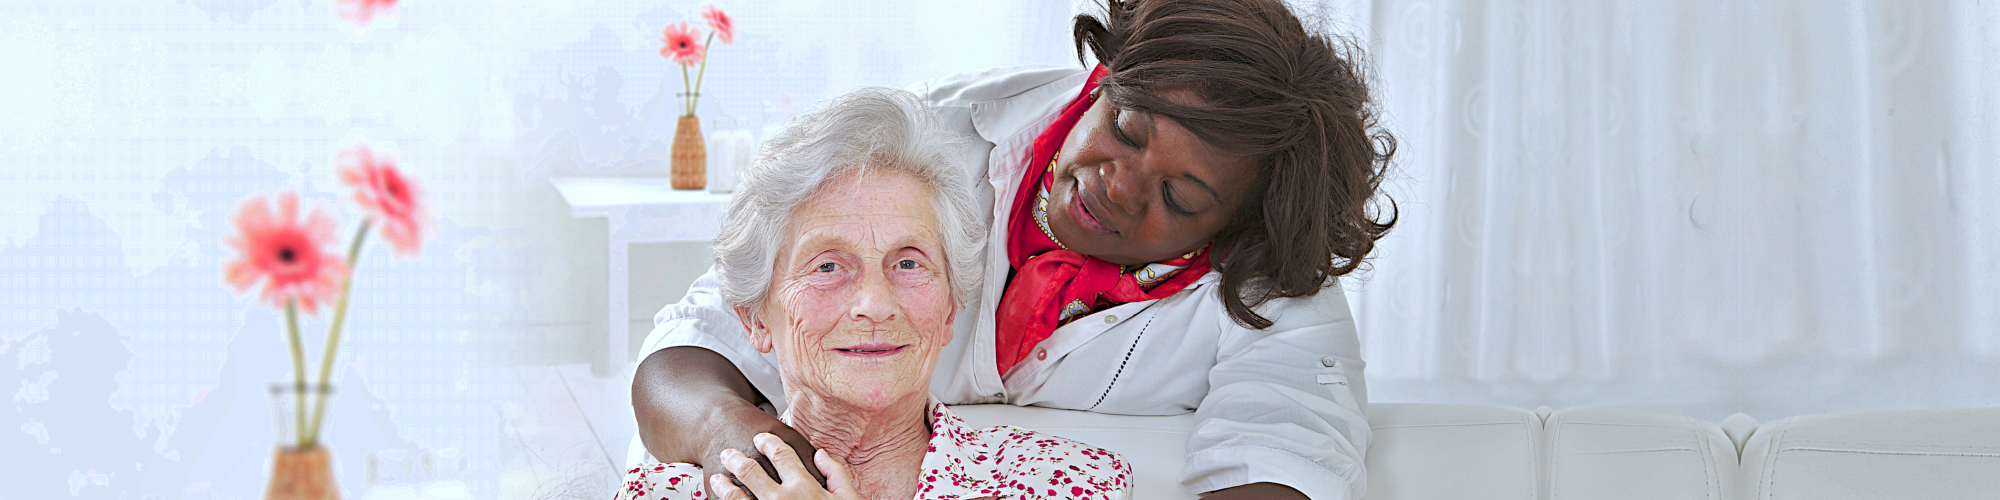 caregiver worried to senior woman smiling